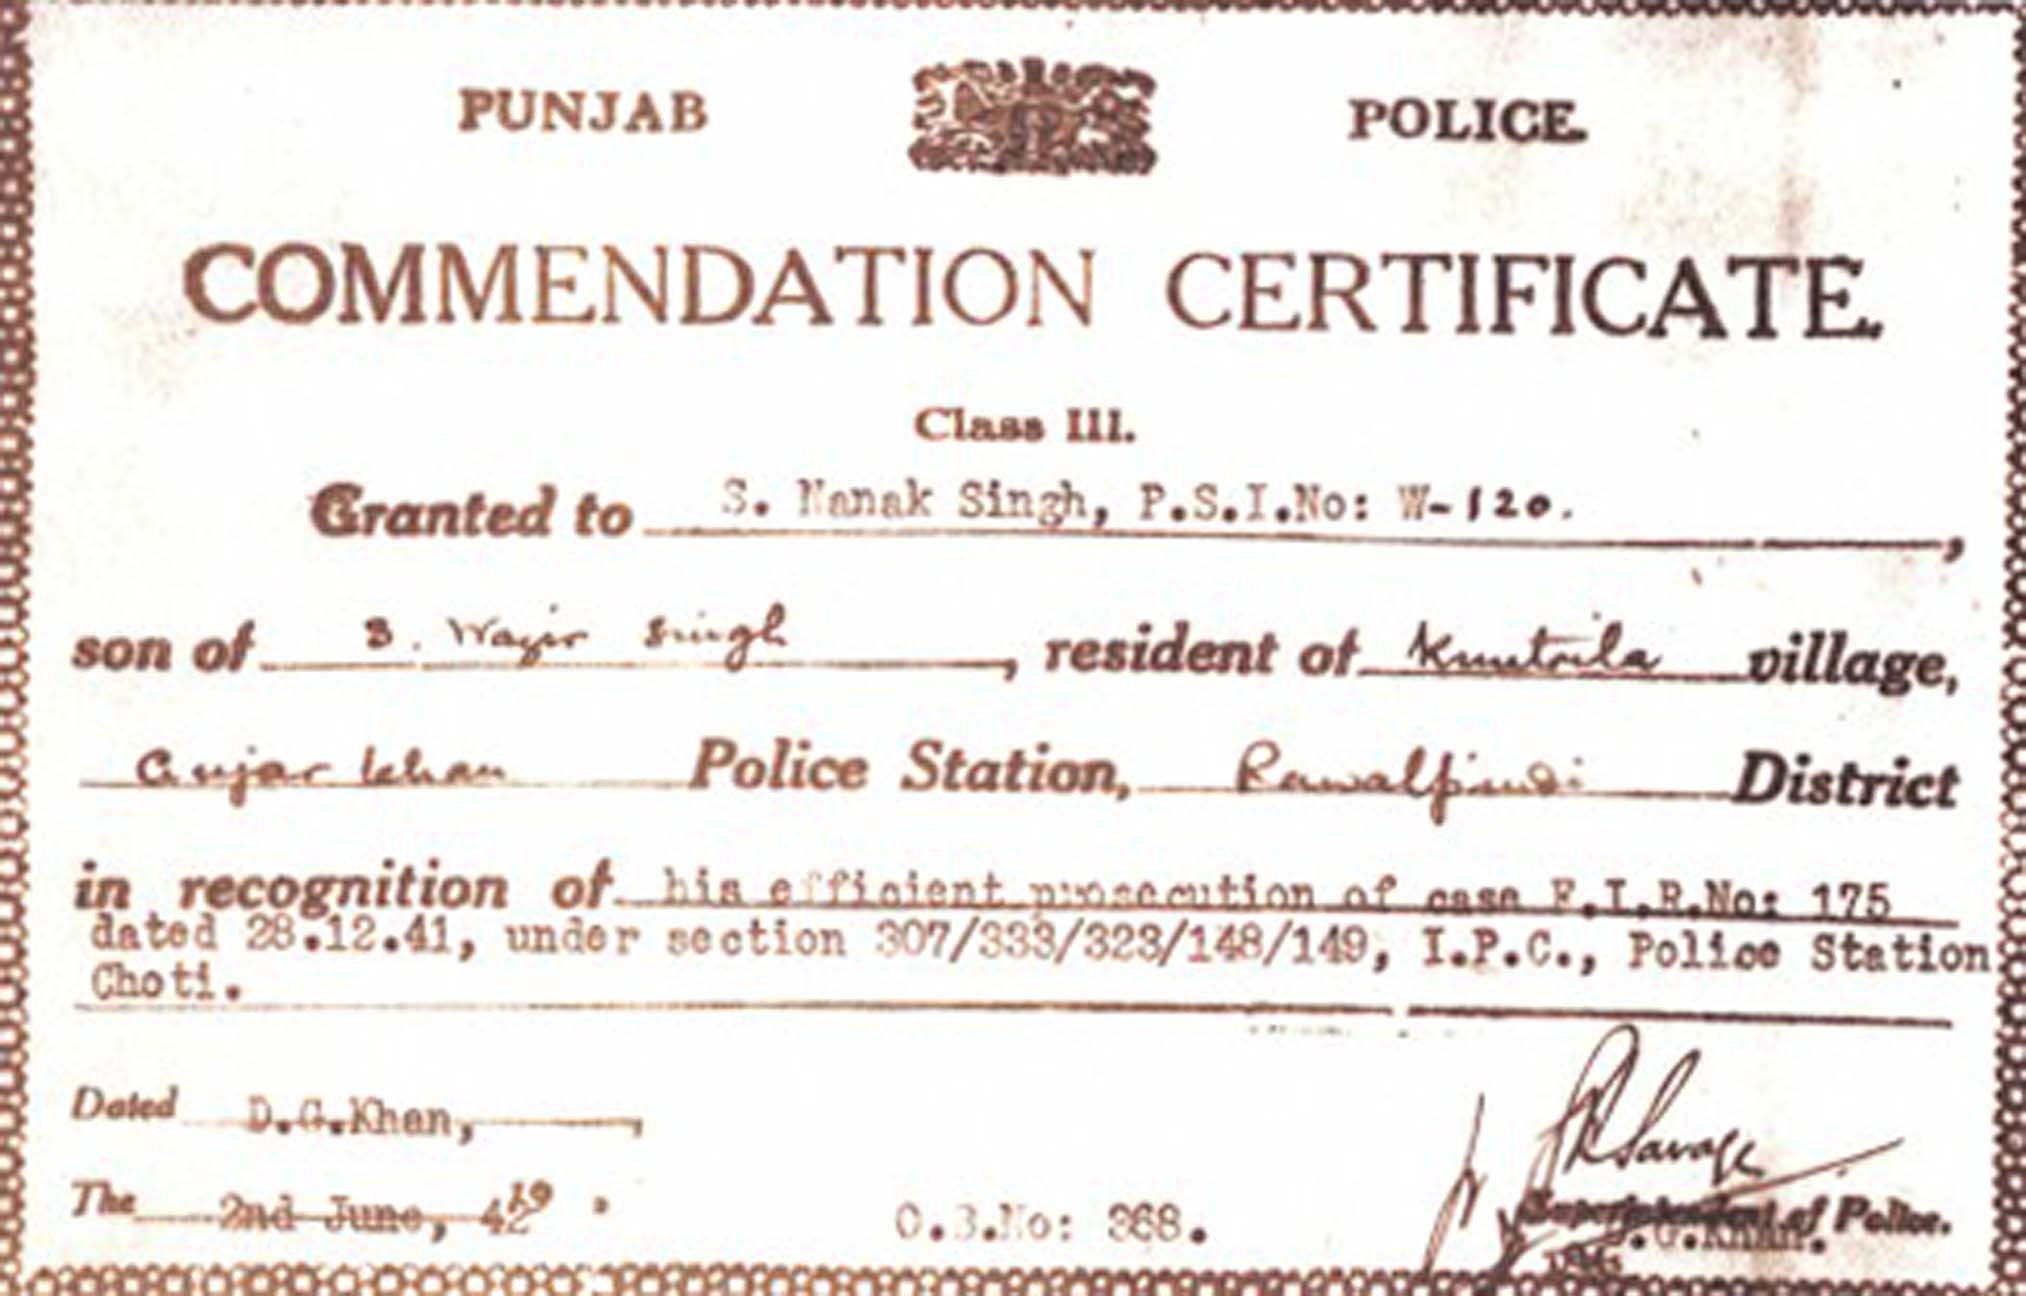 Police Certificate2.jpg (57593 bytes)